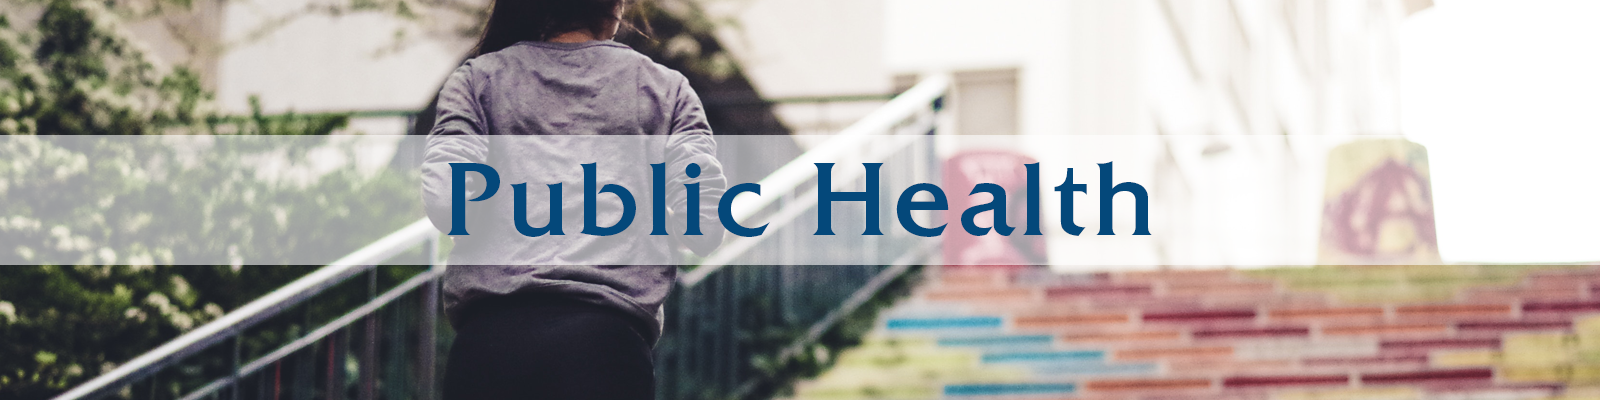 Public Health Banner